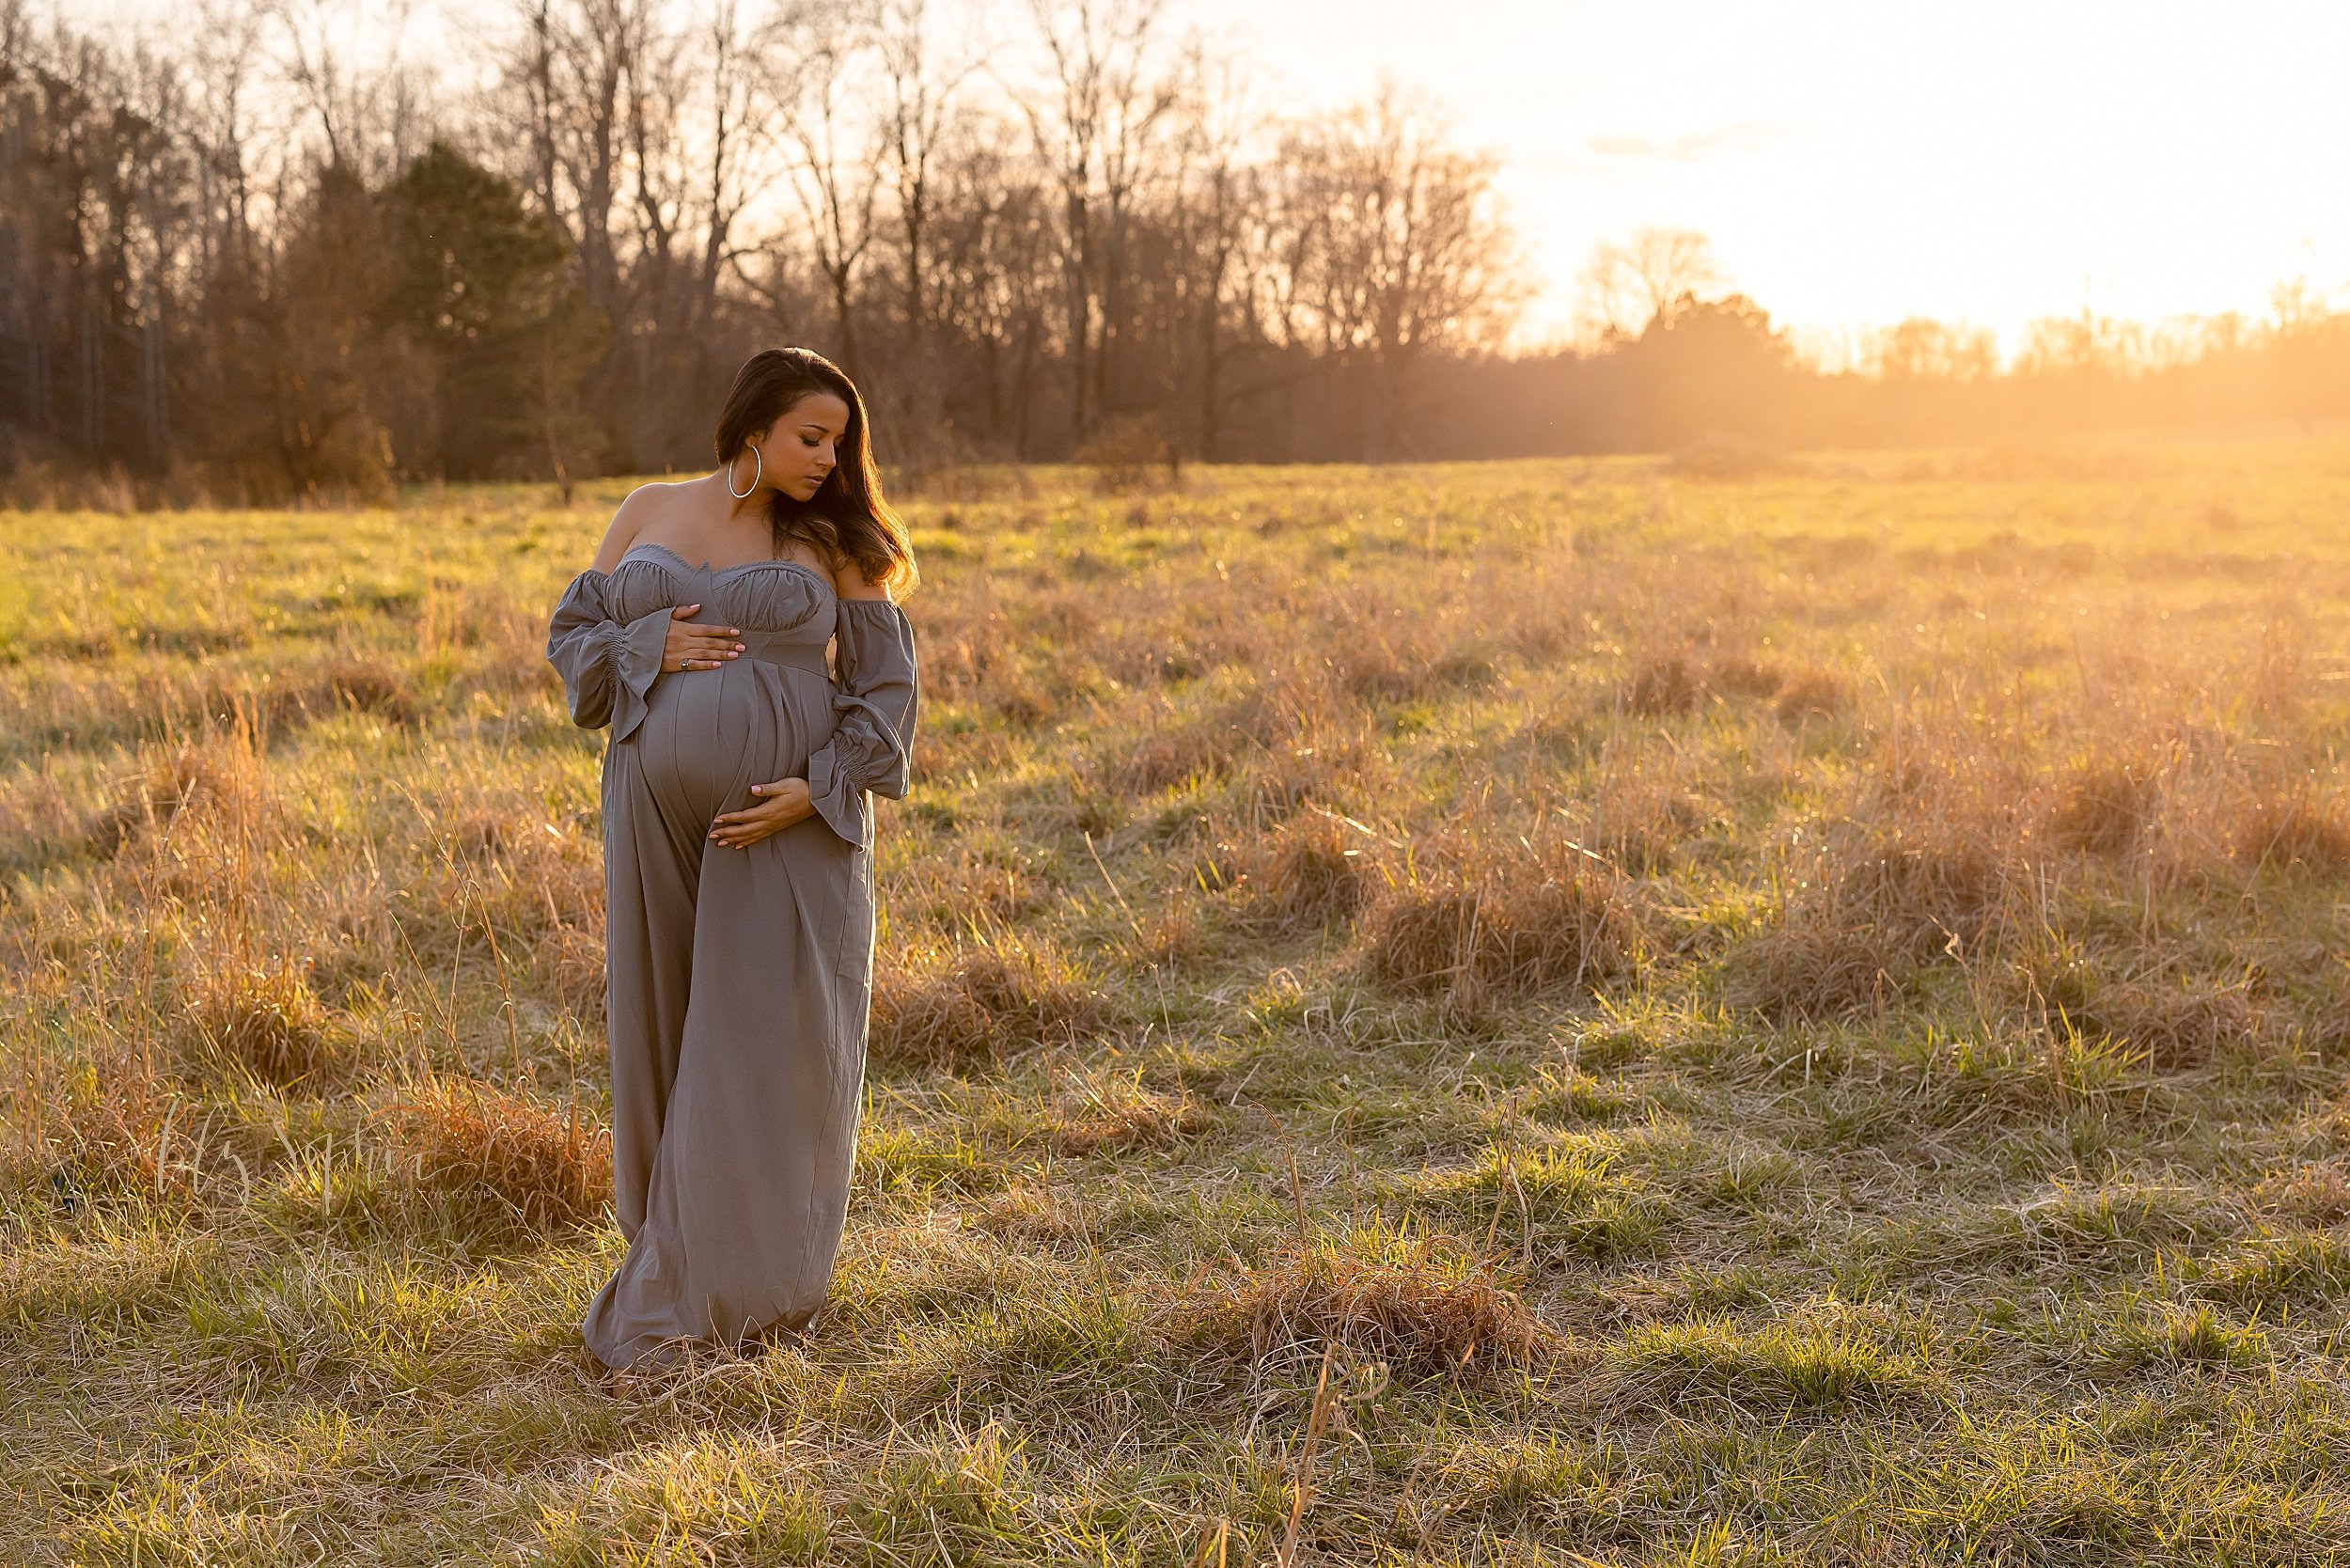 atlanta-pregnancy-photos-expecting-baby-girl-maternity-photoshoot-lawrenceville-oakhurst-decatur-kirkwood--brookhaven-buckhead-smyrna-mableton-midtown-virginia-highlands_8769.jpg